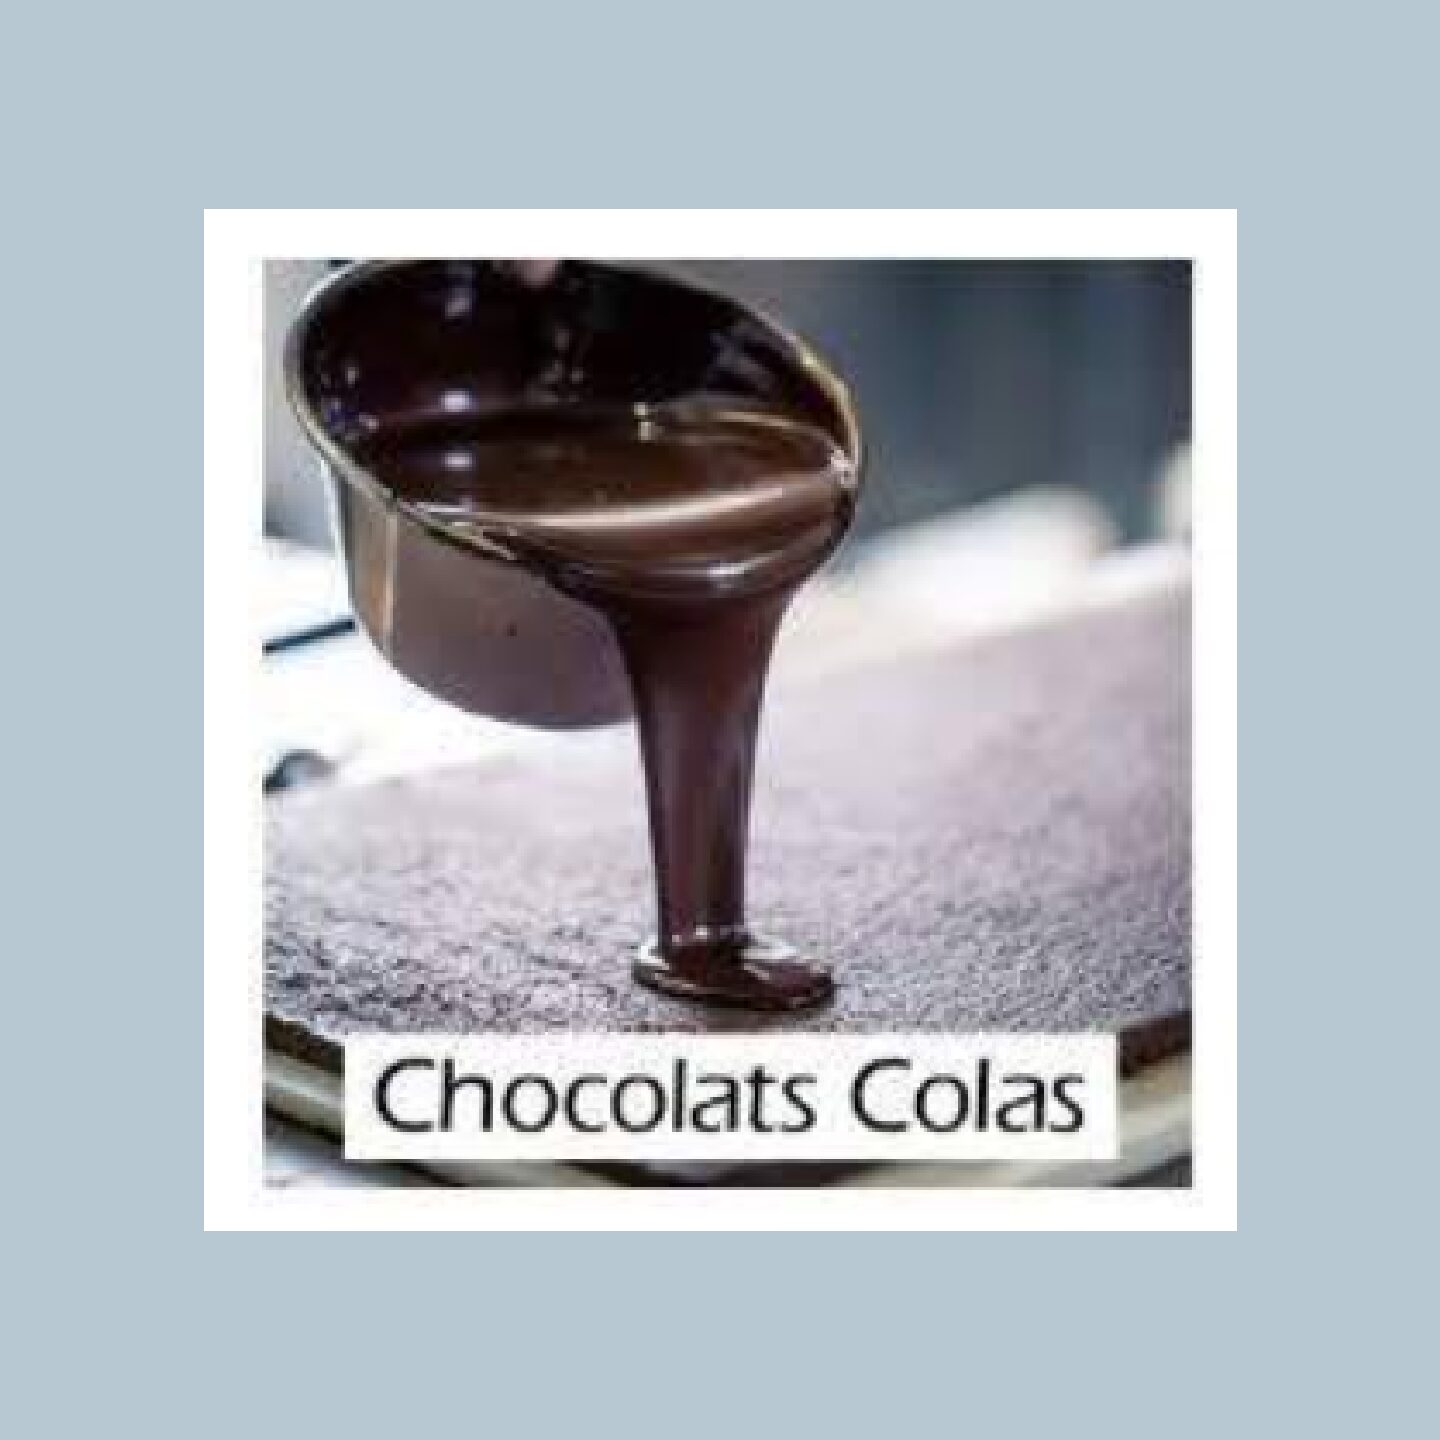 Partenariat avec la Chocolaterie Colas